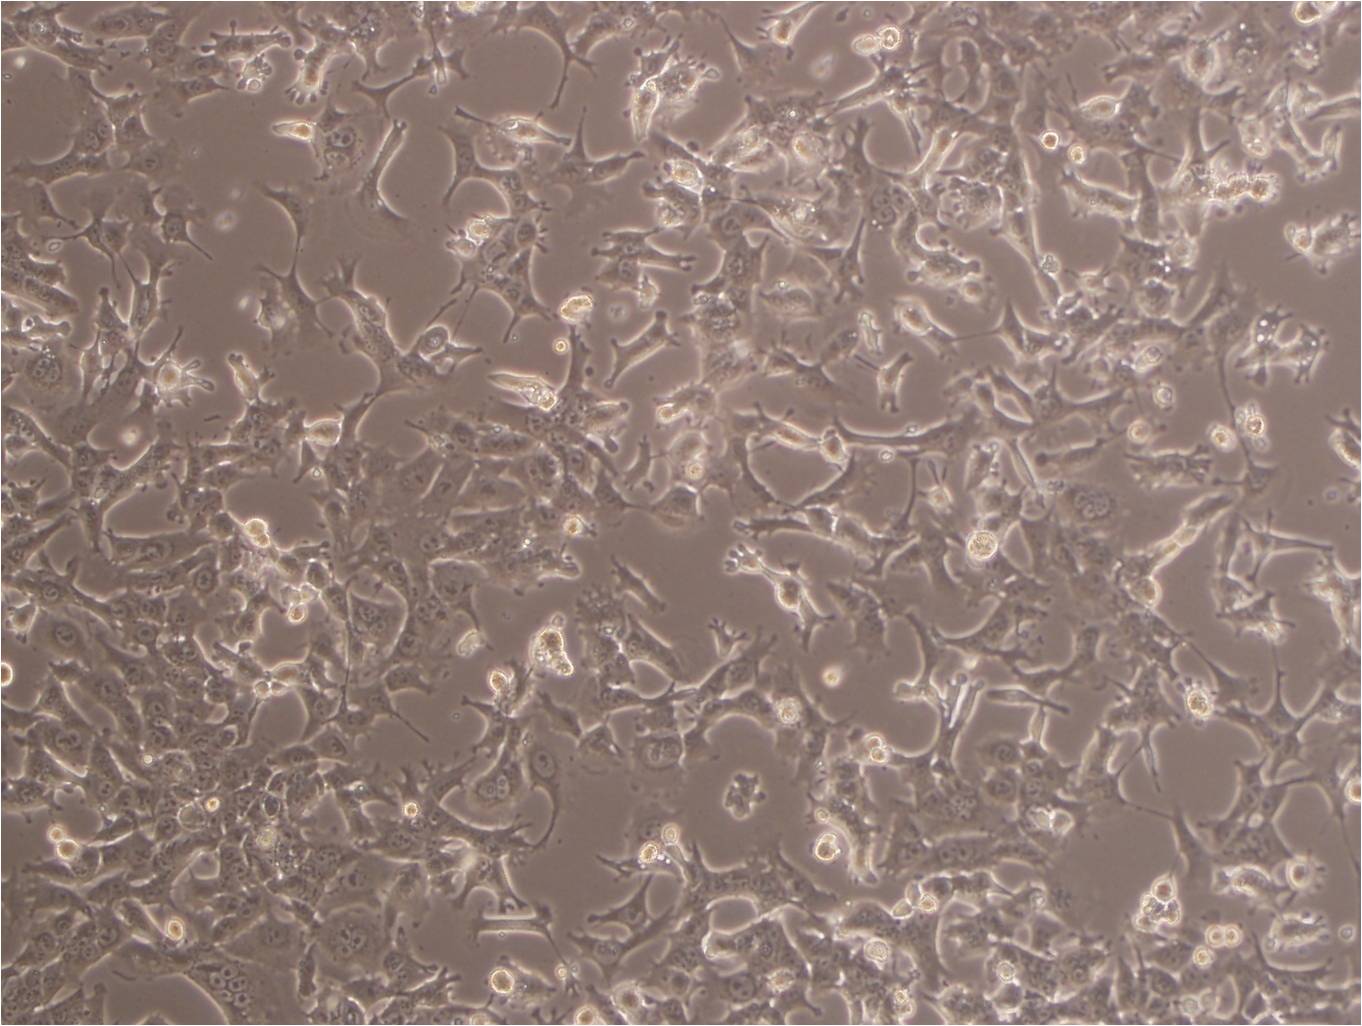 Neuro-2a Cells|小鼠脑神经瘤克隆细胞(包送STR鉴定报告)